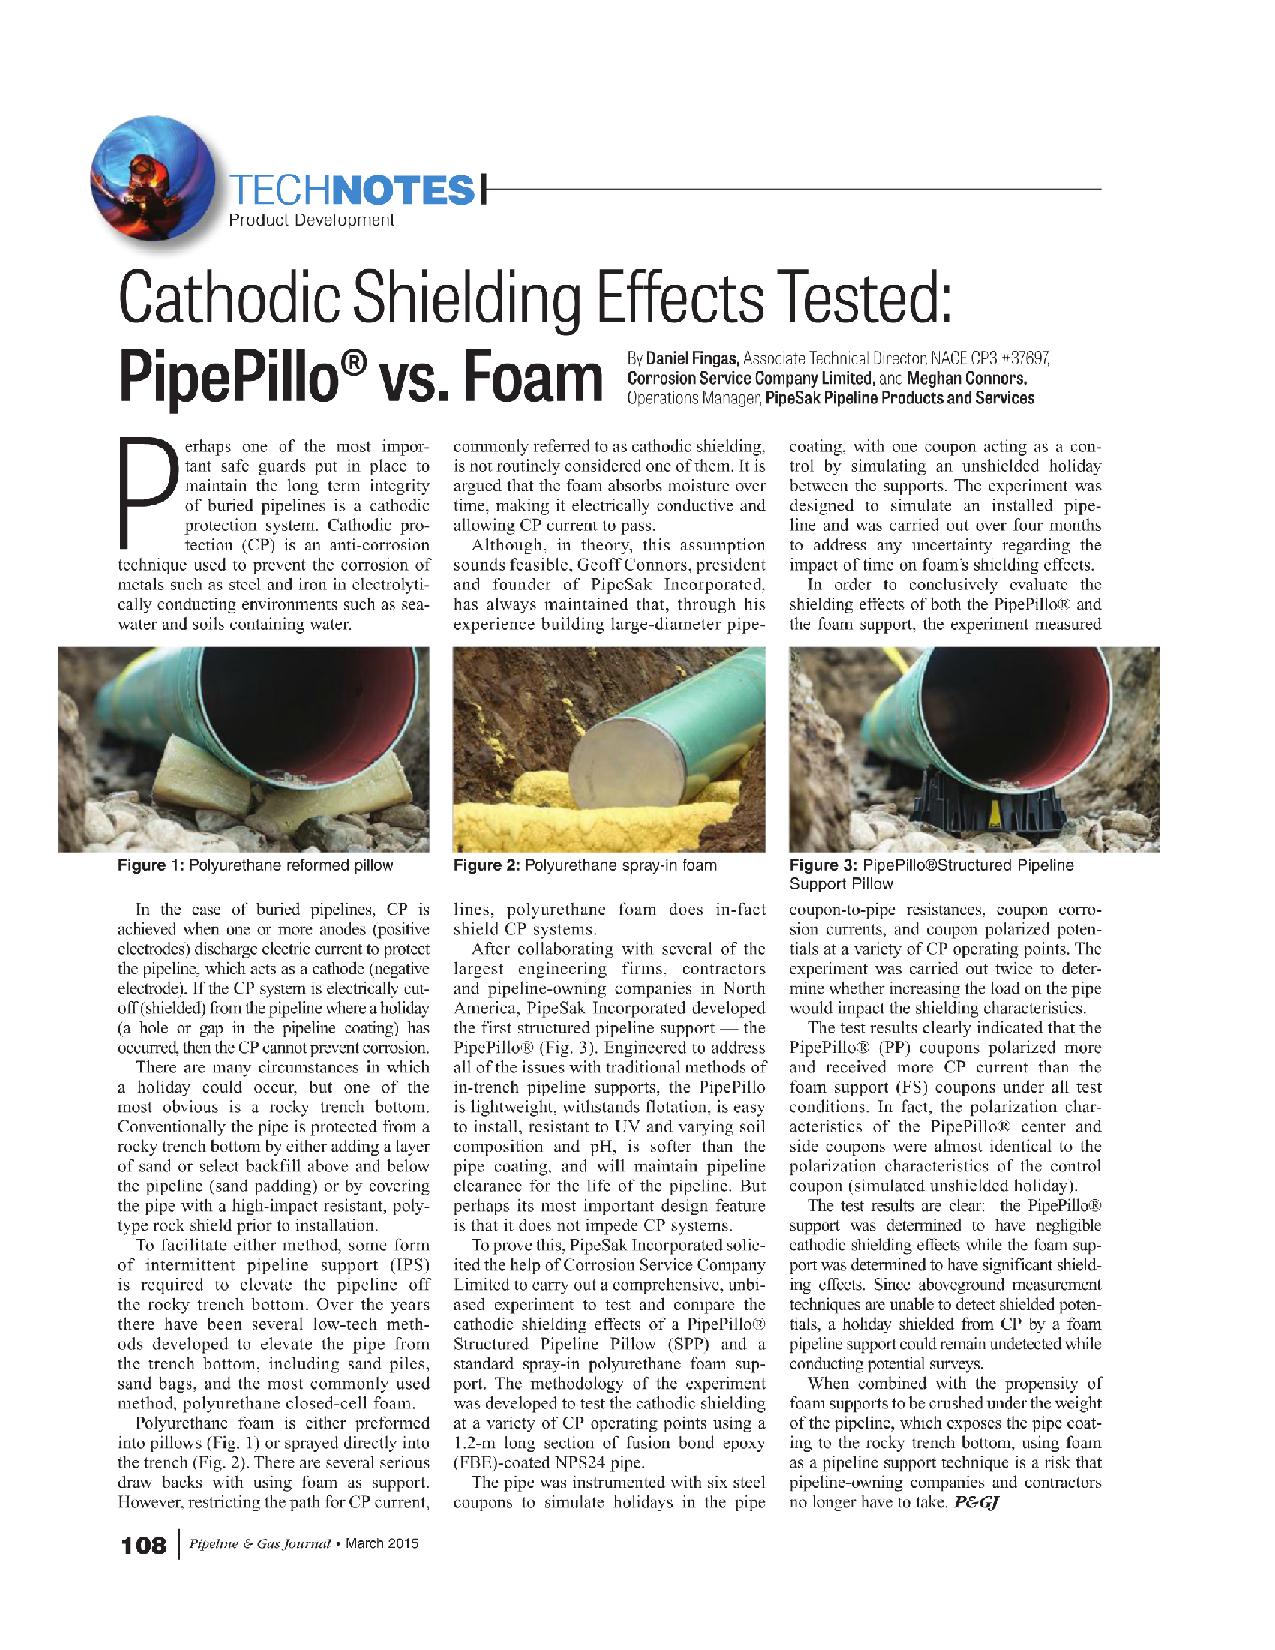 Pipeline & Gas Journal - PipePillo vs Foam Article_March 2015-page-001